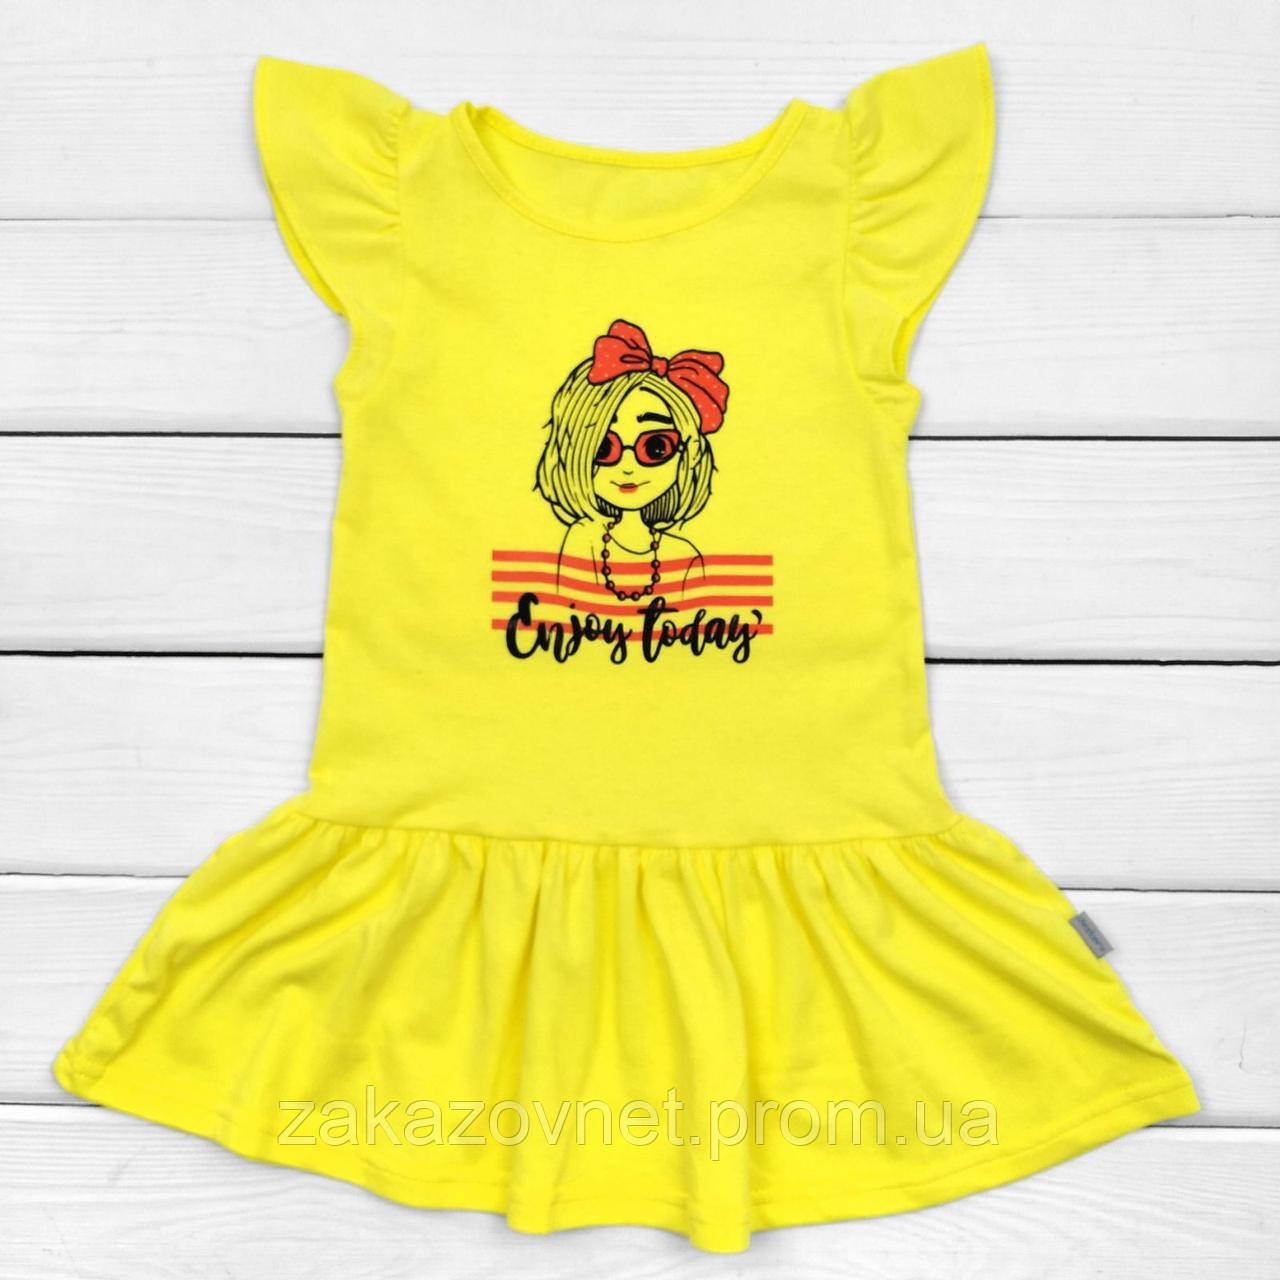 Дитяче плаття Dexters з коротким рукавом enjoy today 86 см жовтий (13121332024) ZK, код: 8329102